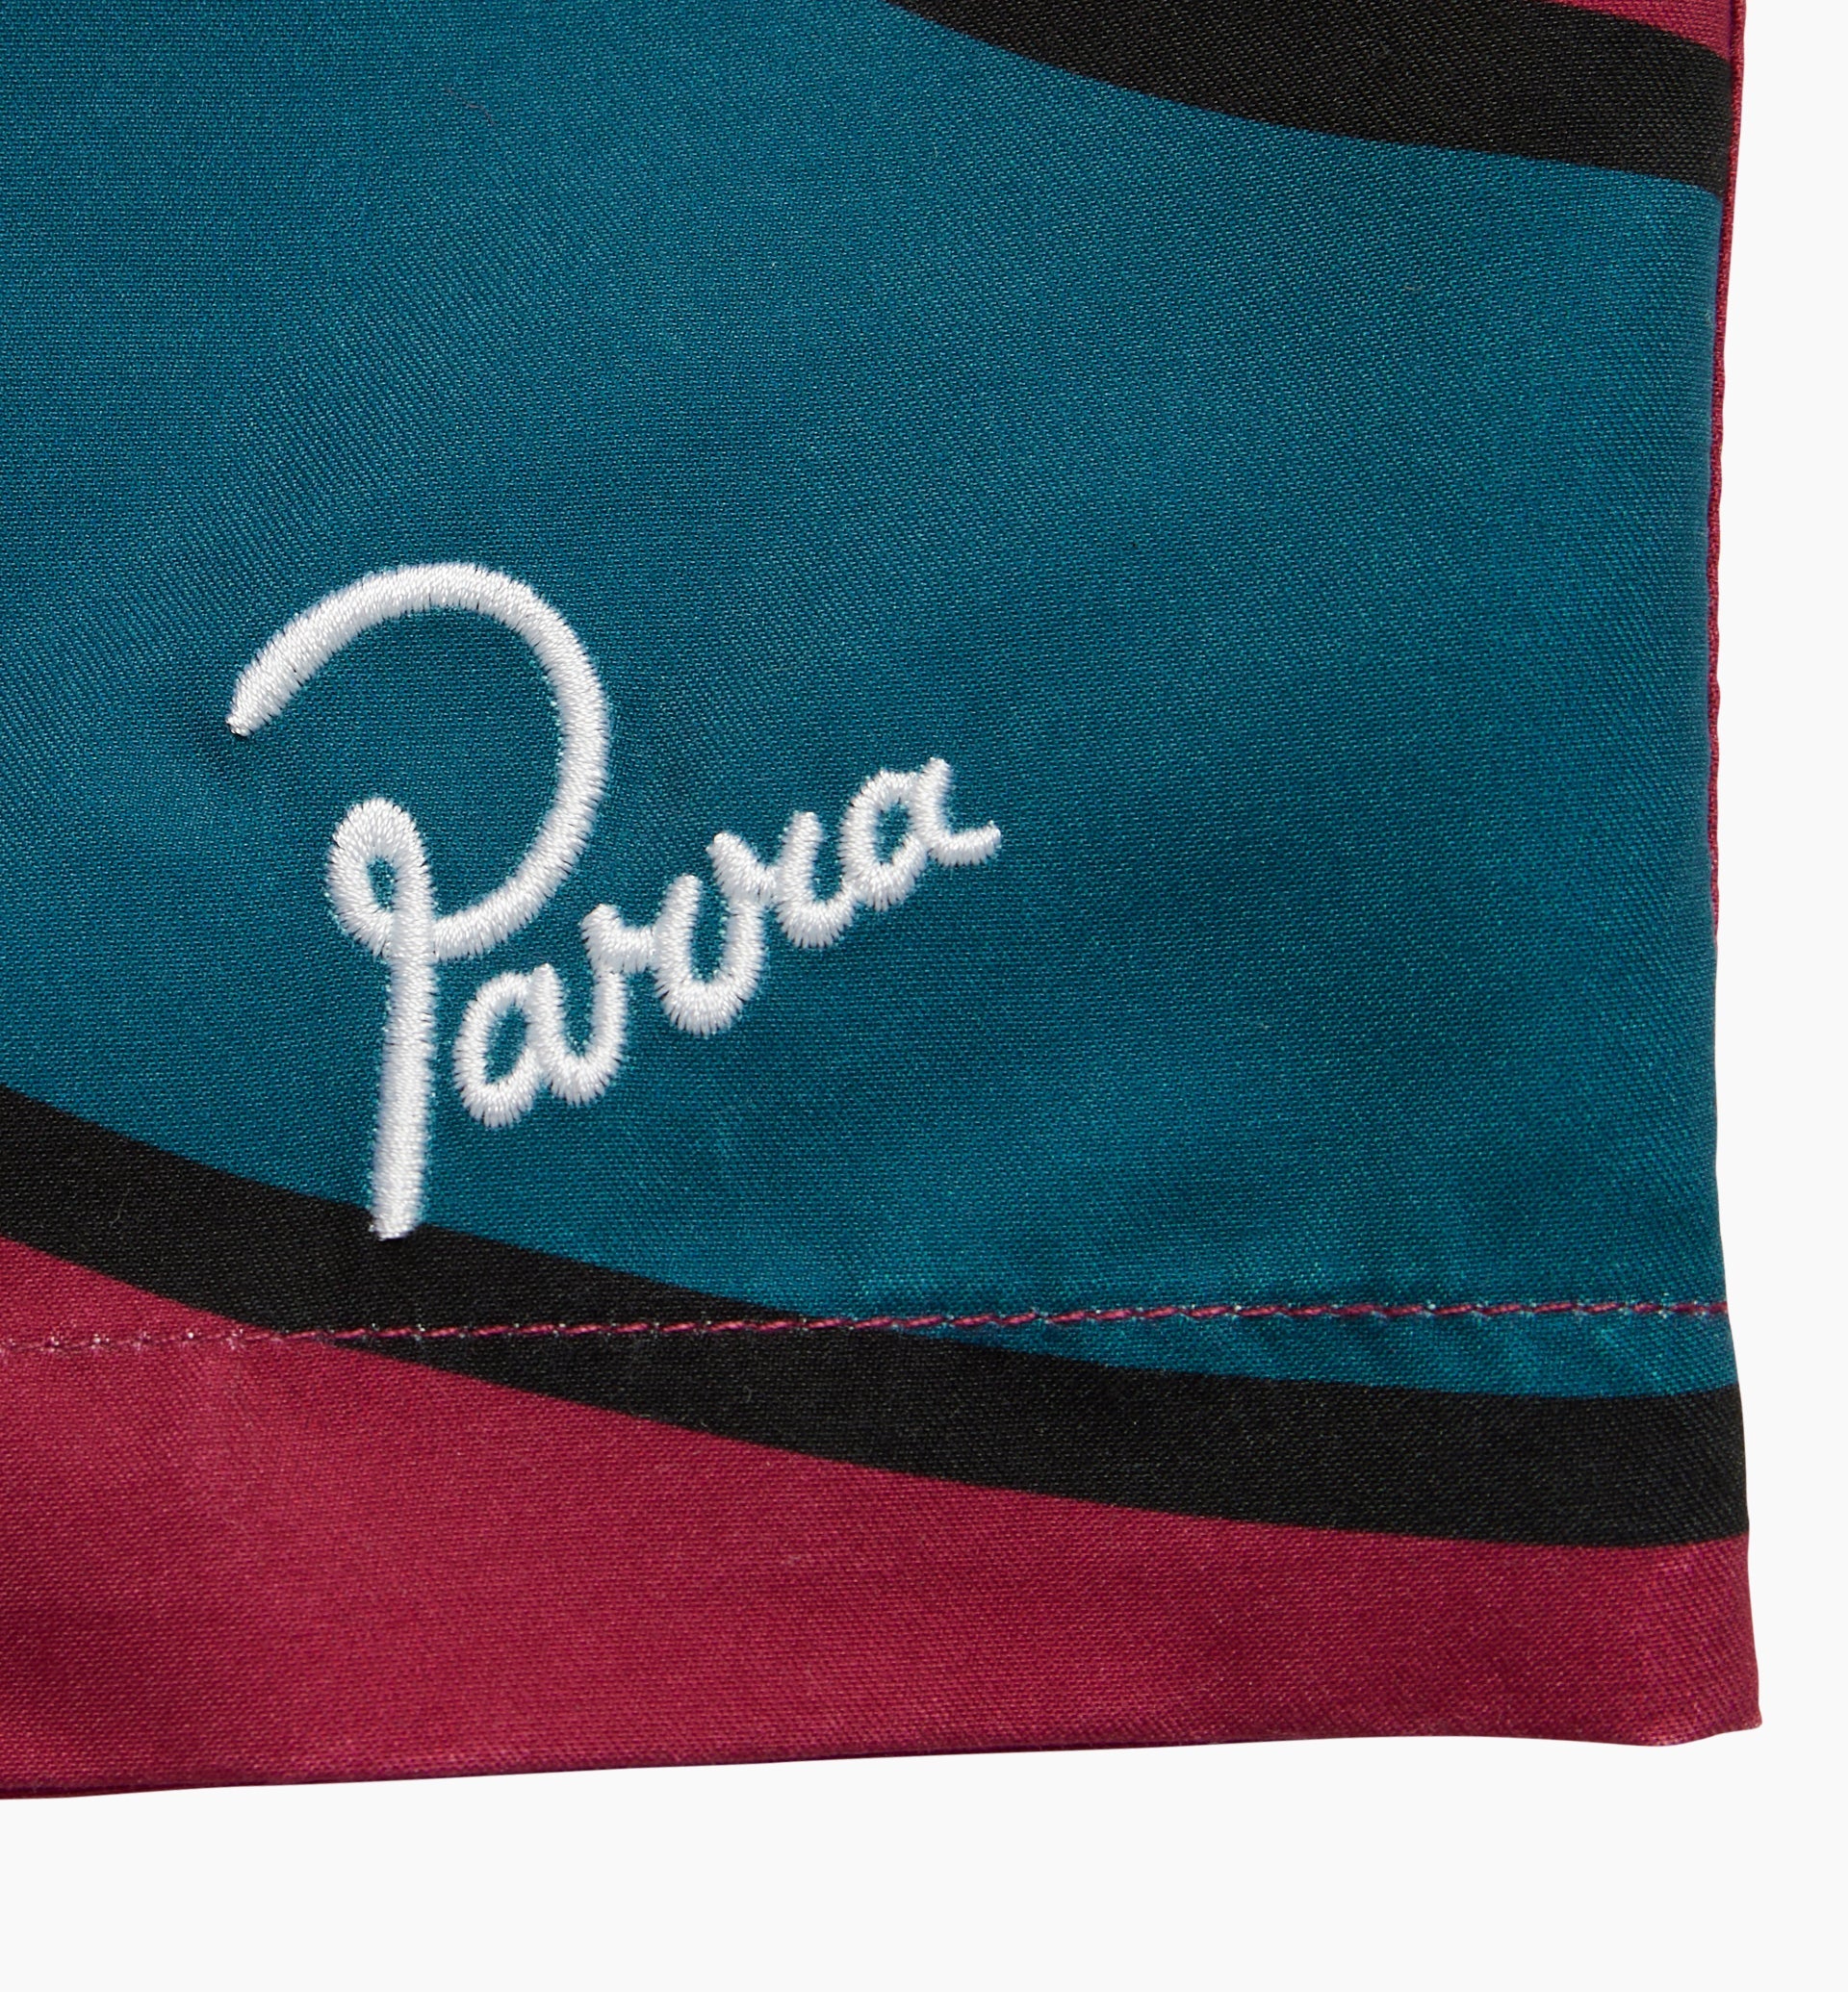 Parra - mountain waves swim shorts